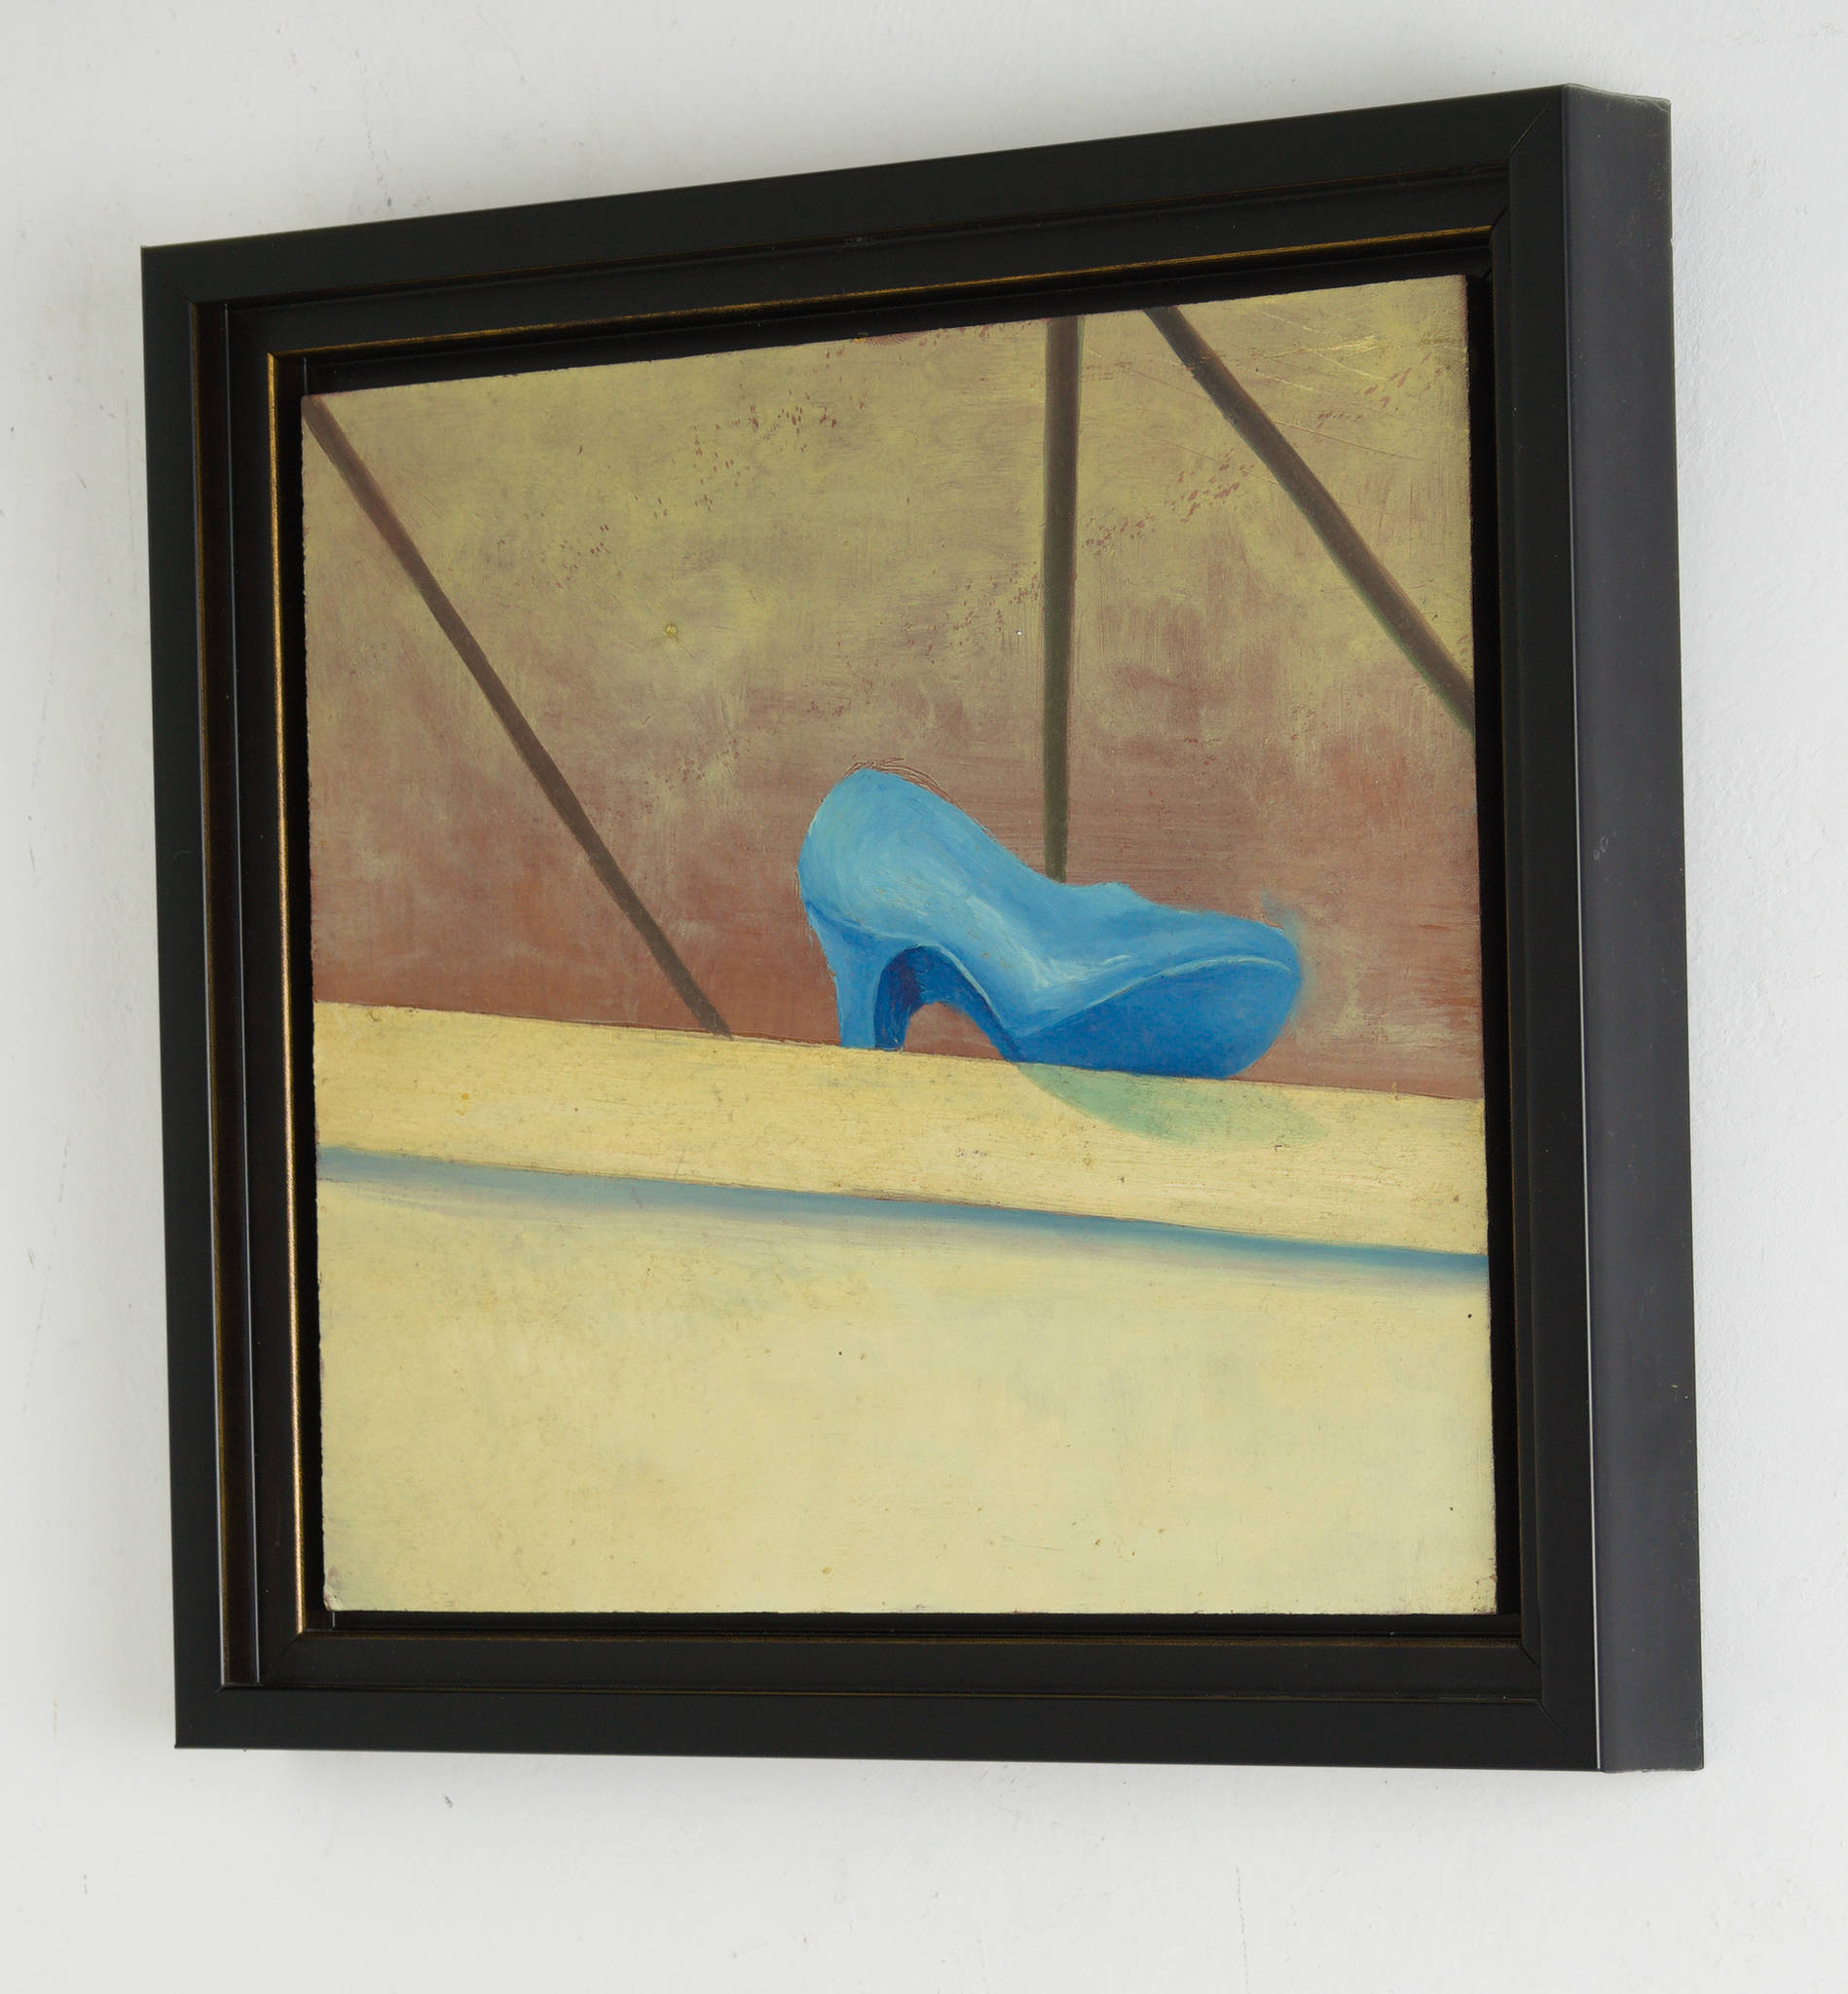 Adam Nudelman 'Untitled (Blue Shoe)'